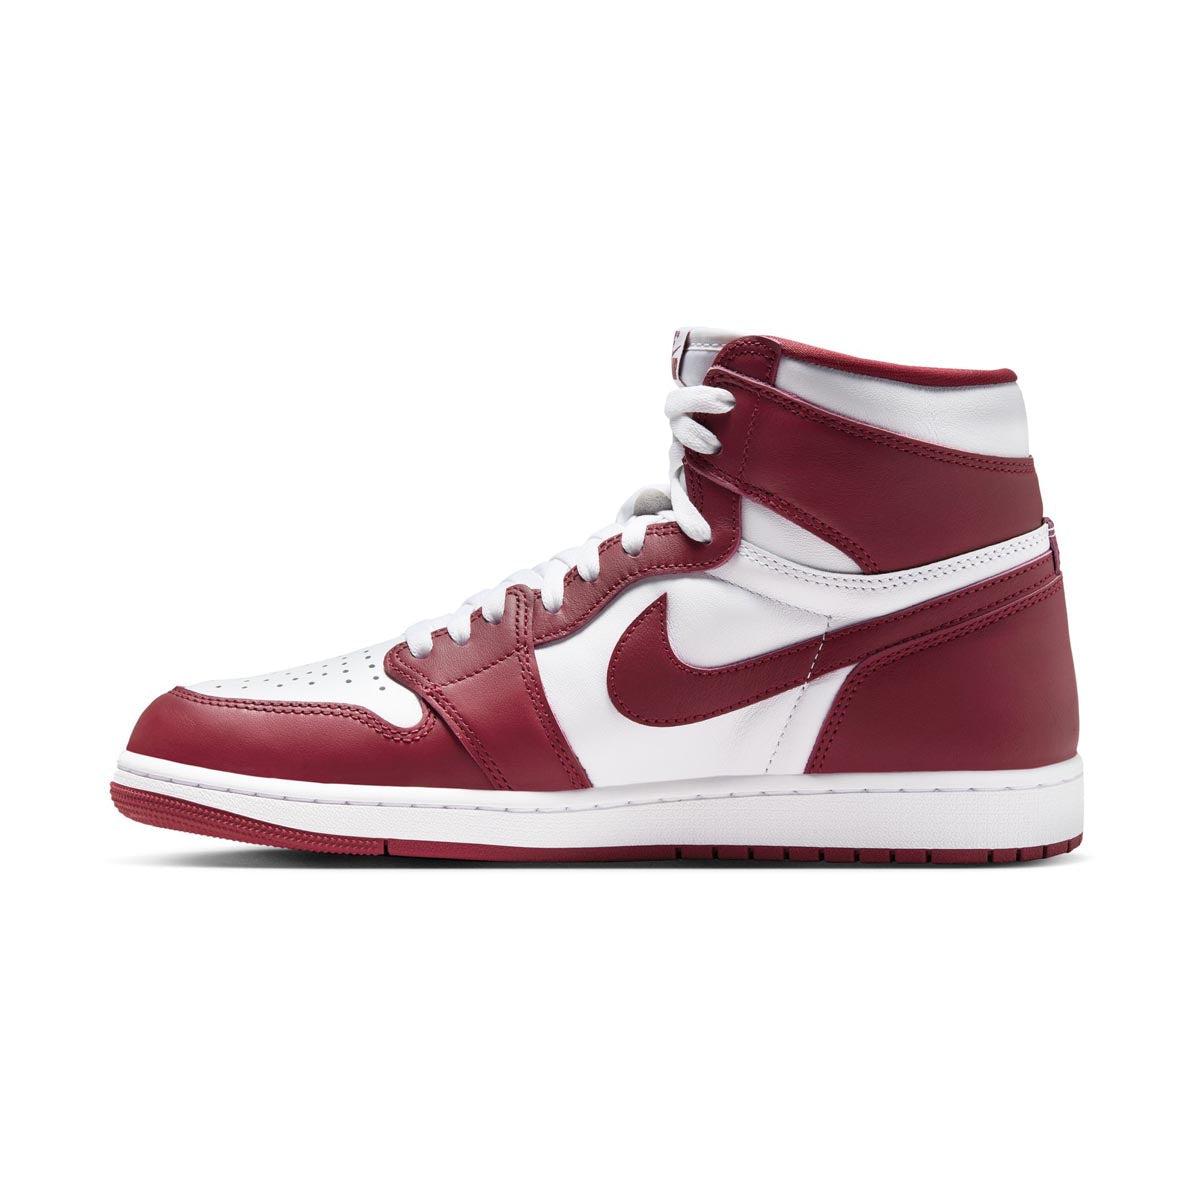 Jordan 5 Retro Dj Khaled We The Best Crimson Bli Men's Shoes